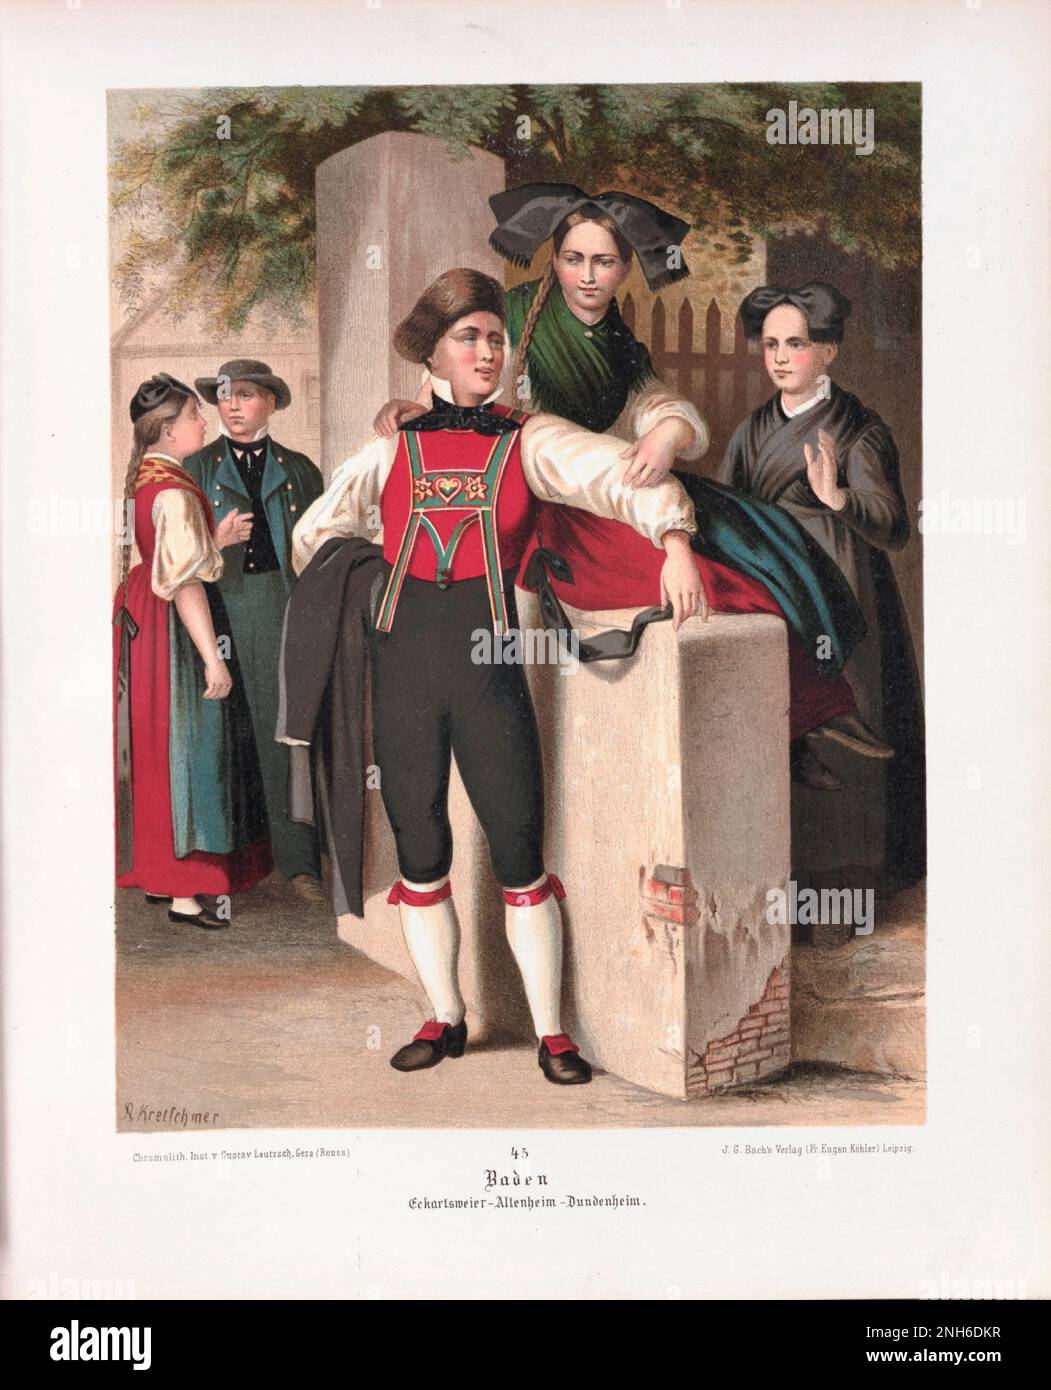 German folk costume. Baden. 19th-century lithography. Stock Photo